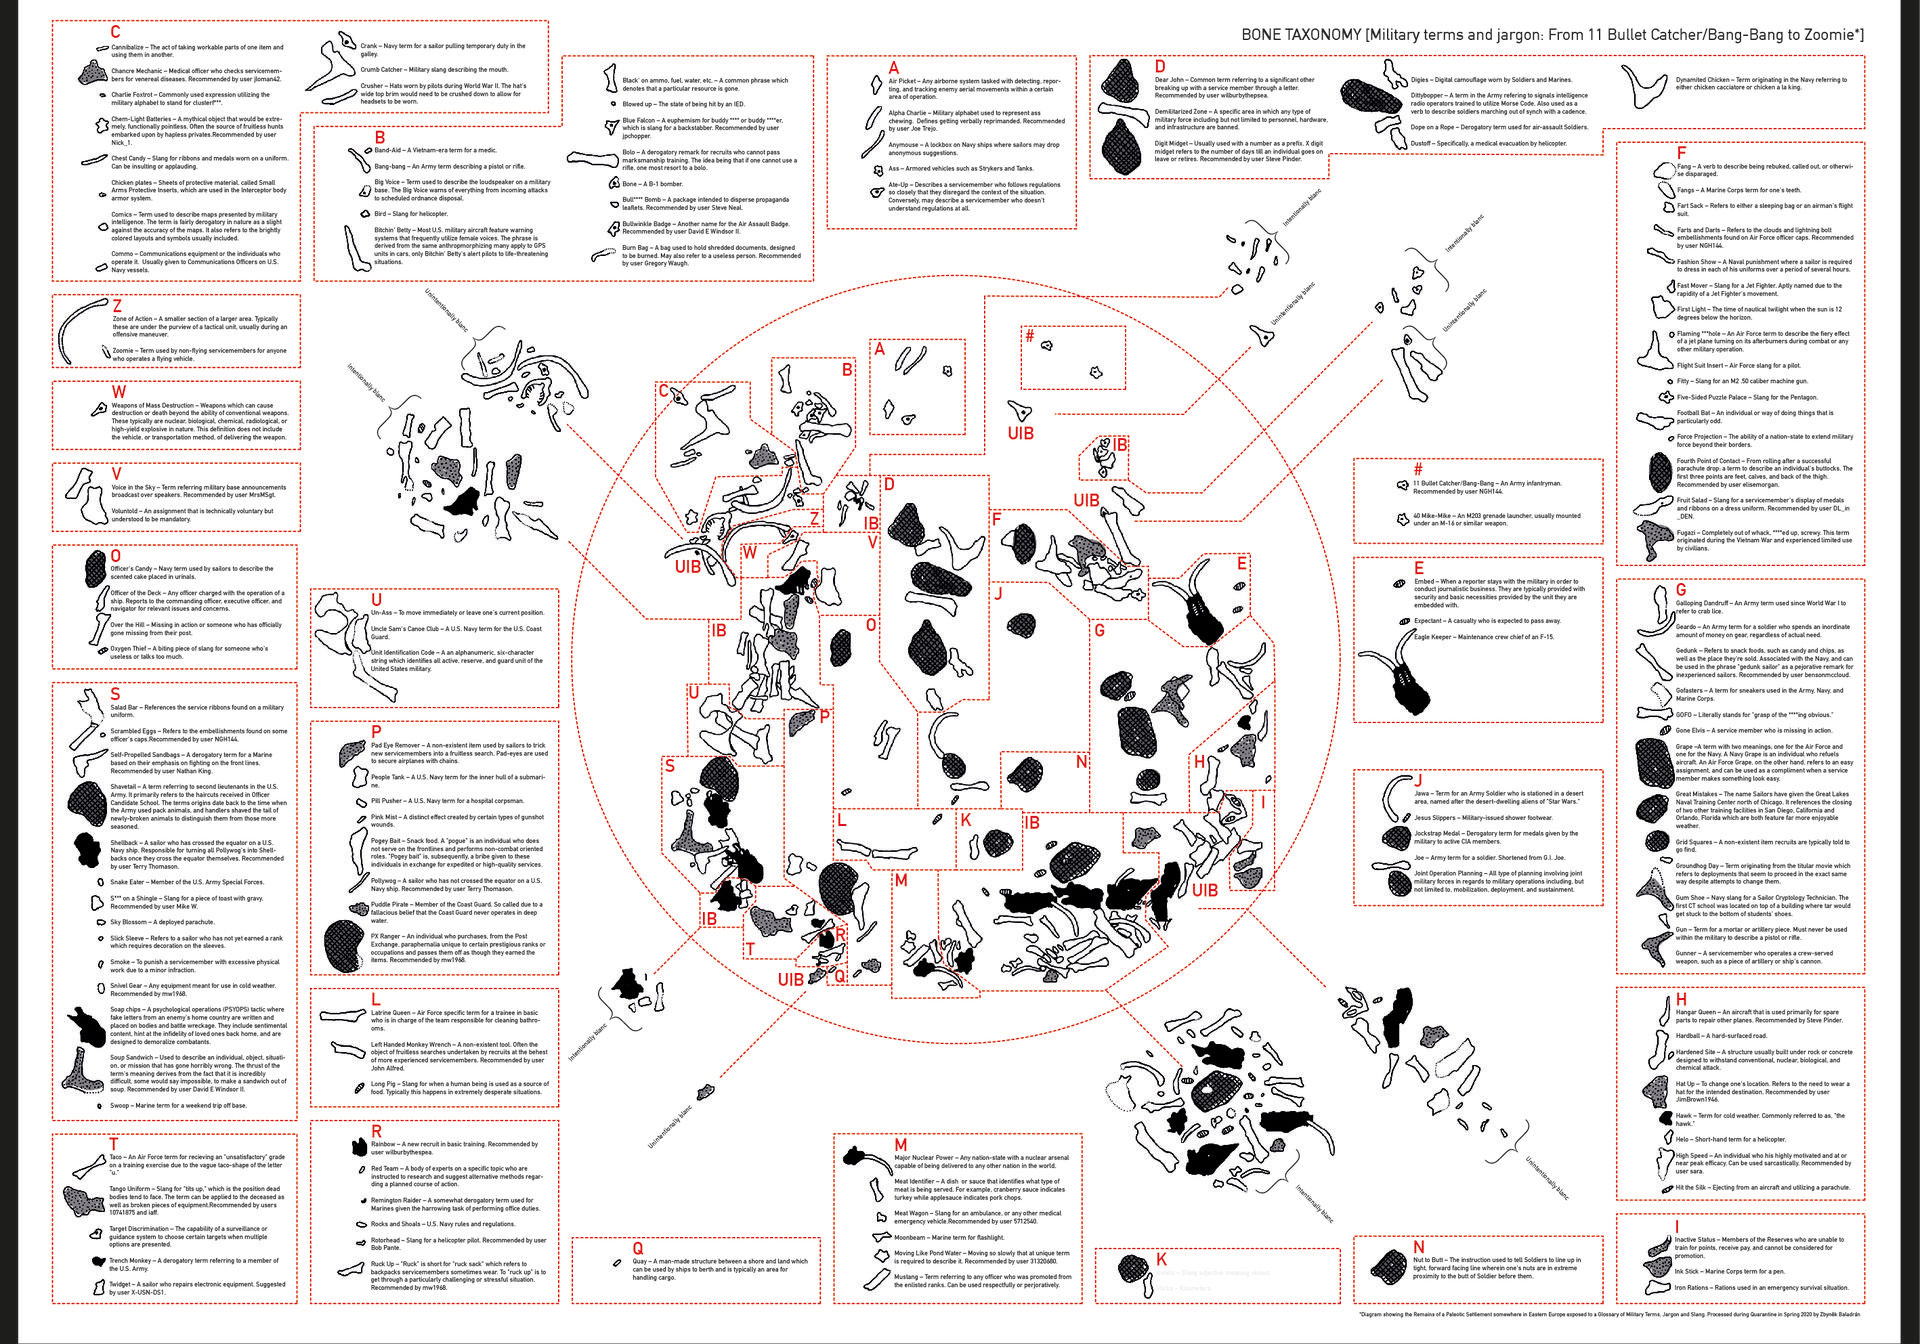 Zbyněk Baladrán, Taxonomy of bones, 2020, stampa su cartone, 70x100 cm, courtesy l'artista